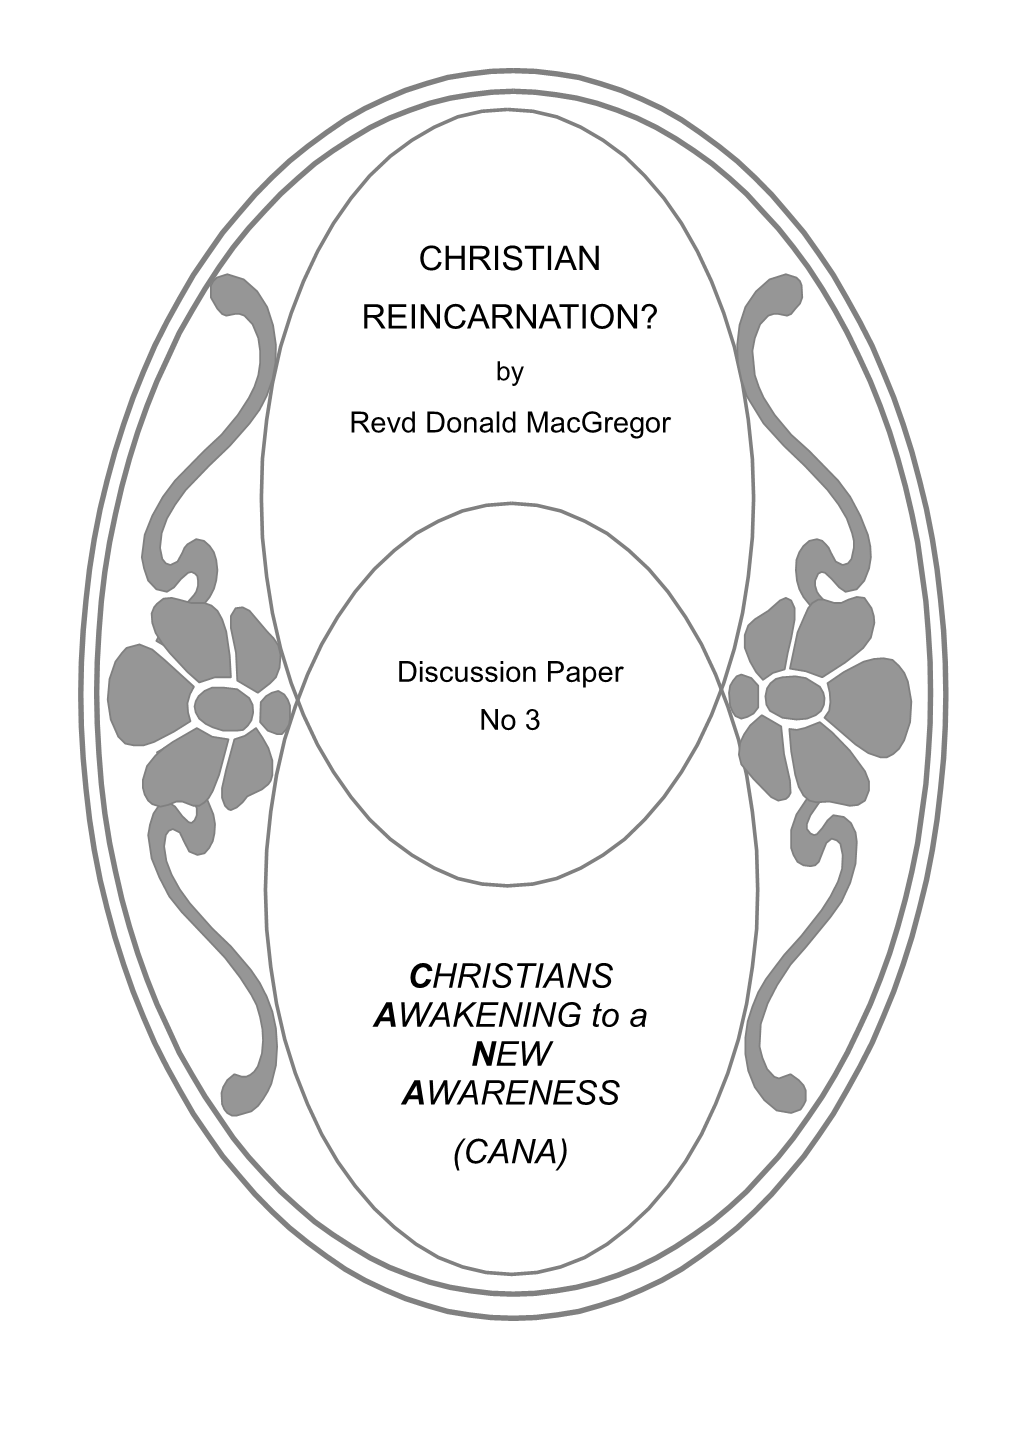 CHRISTIAN REINCARNATION? by Revd Donald Macgregor